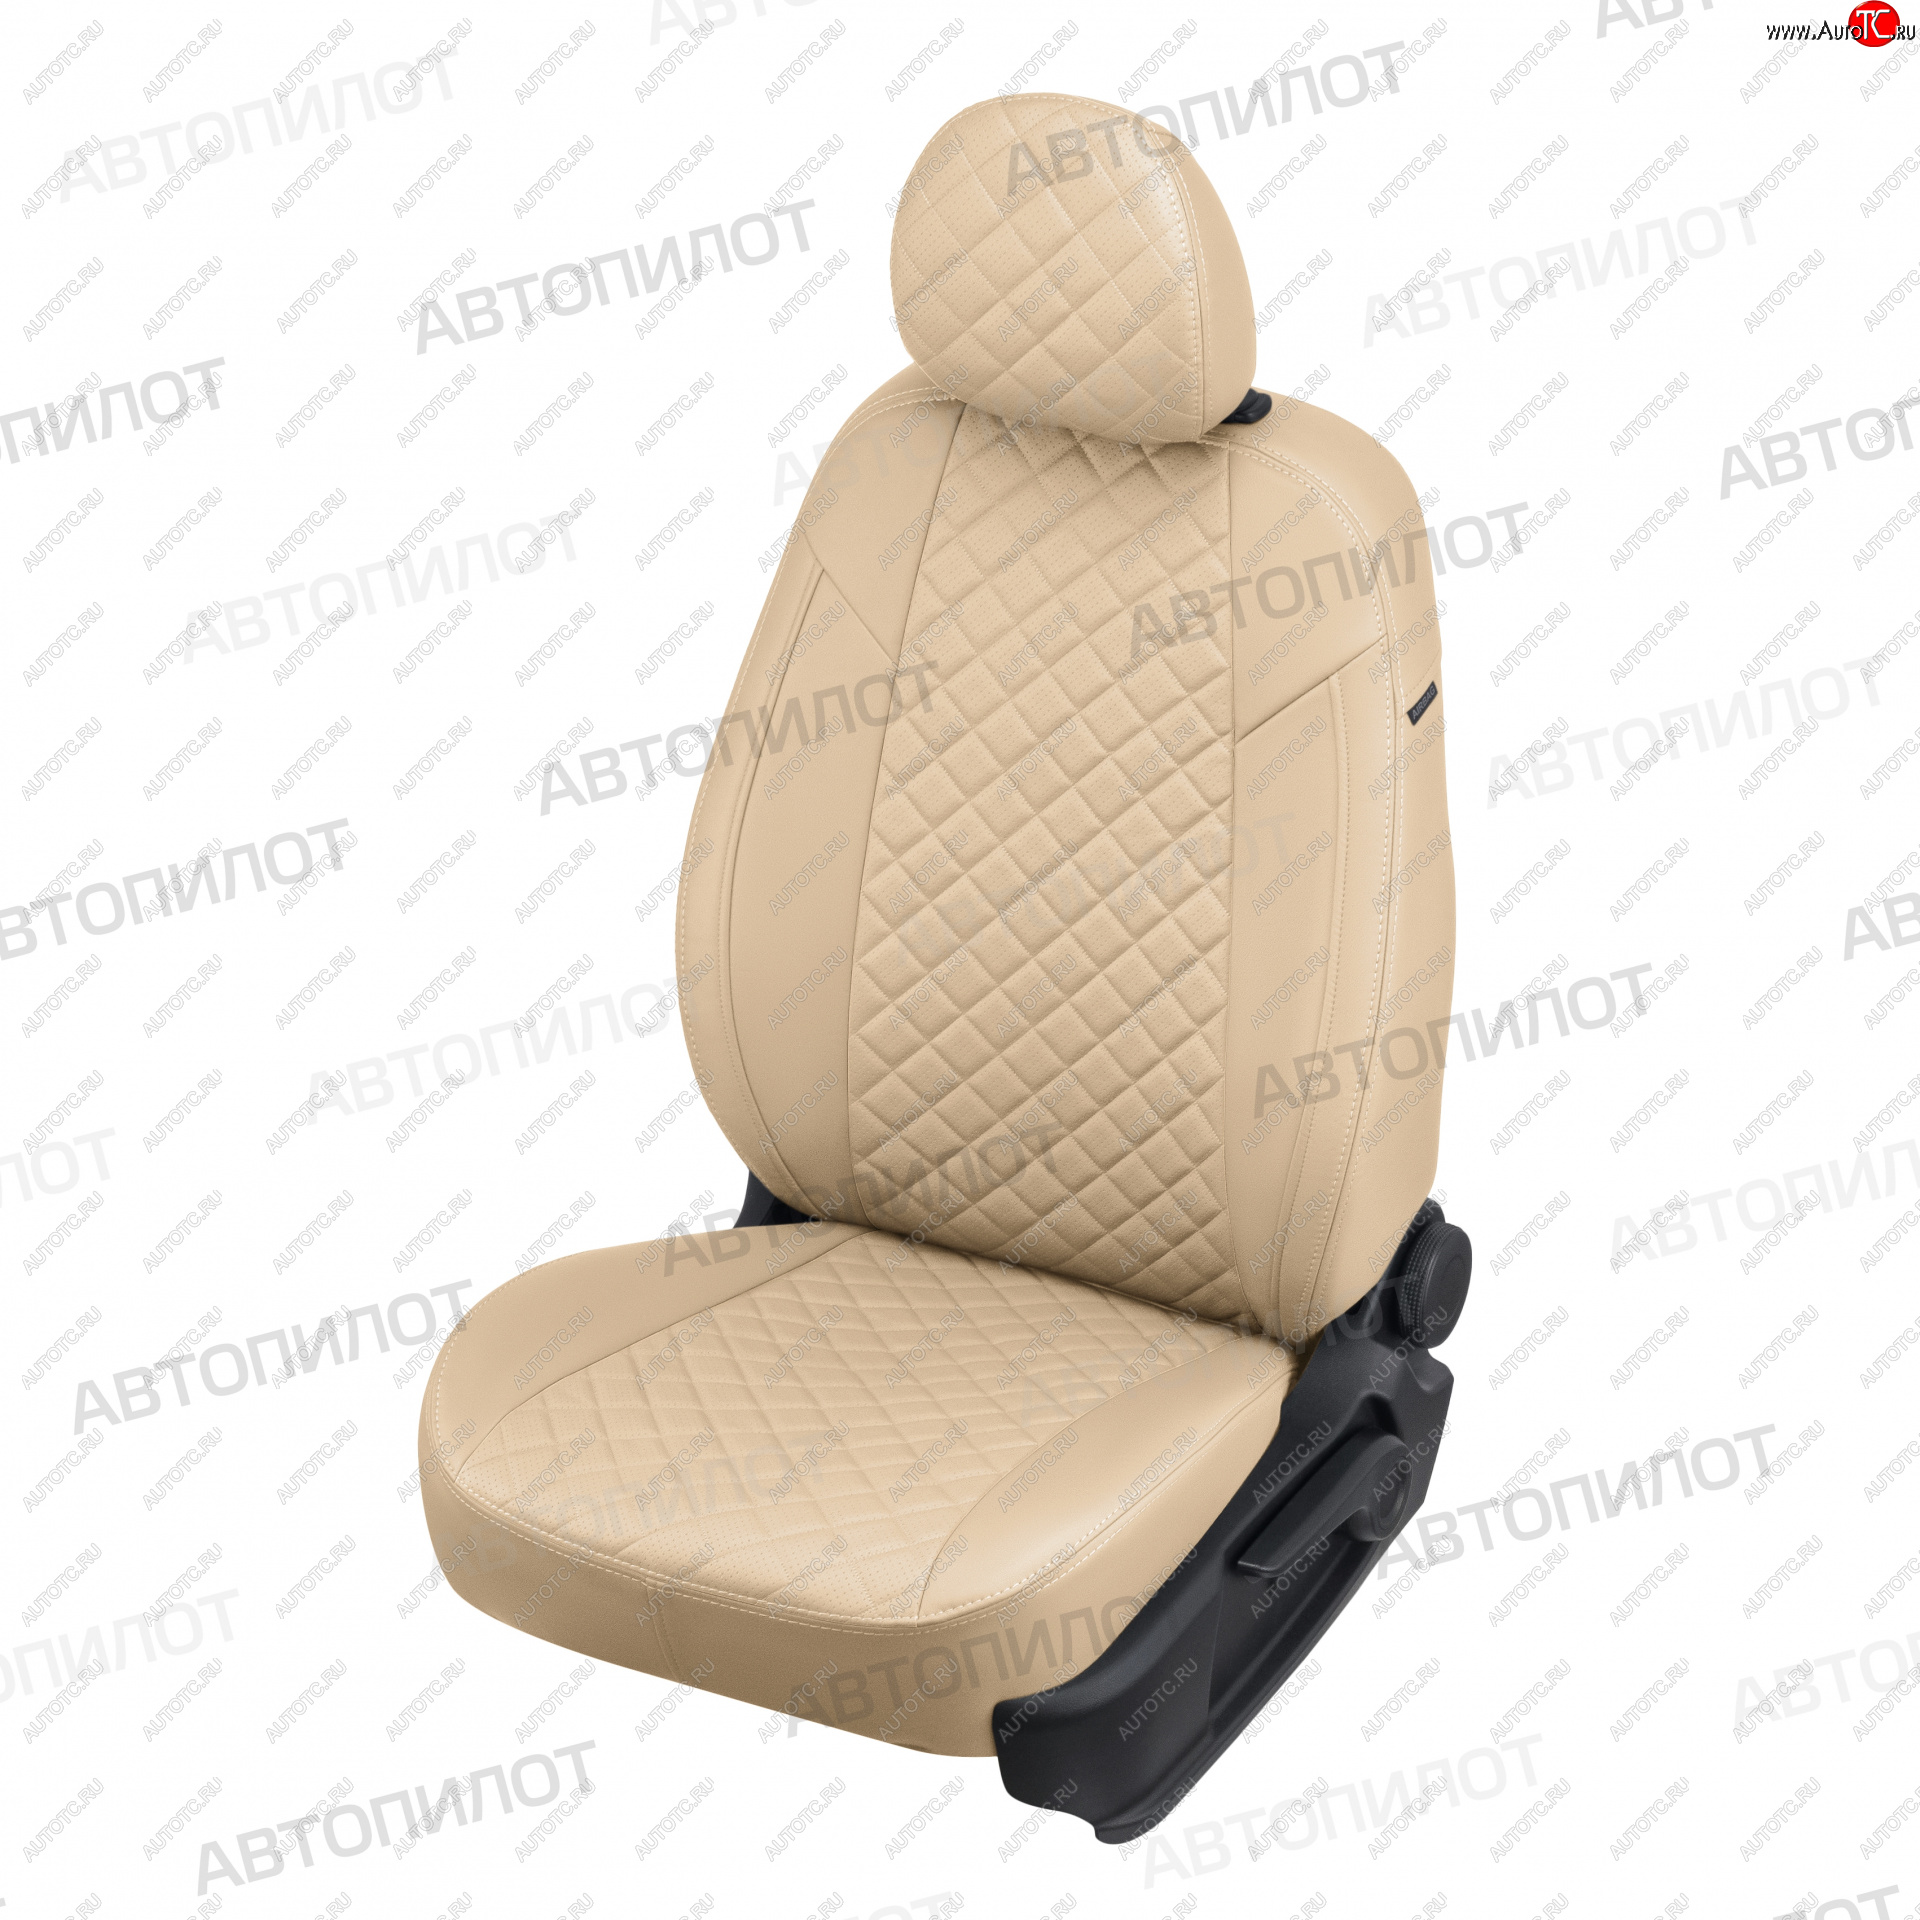 14 499 р. Чехлы сидений (5 мест, экокожа) Автопилот Ромб  Ford Galaxy  2 (2006-2015) (бежевый)